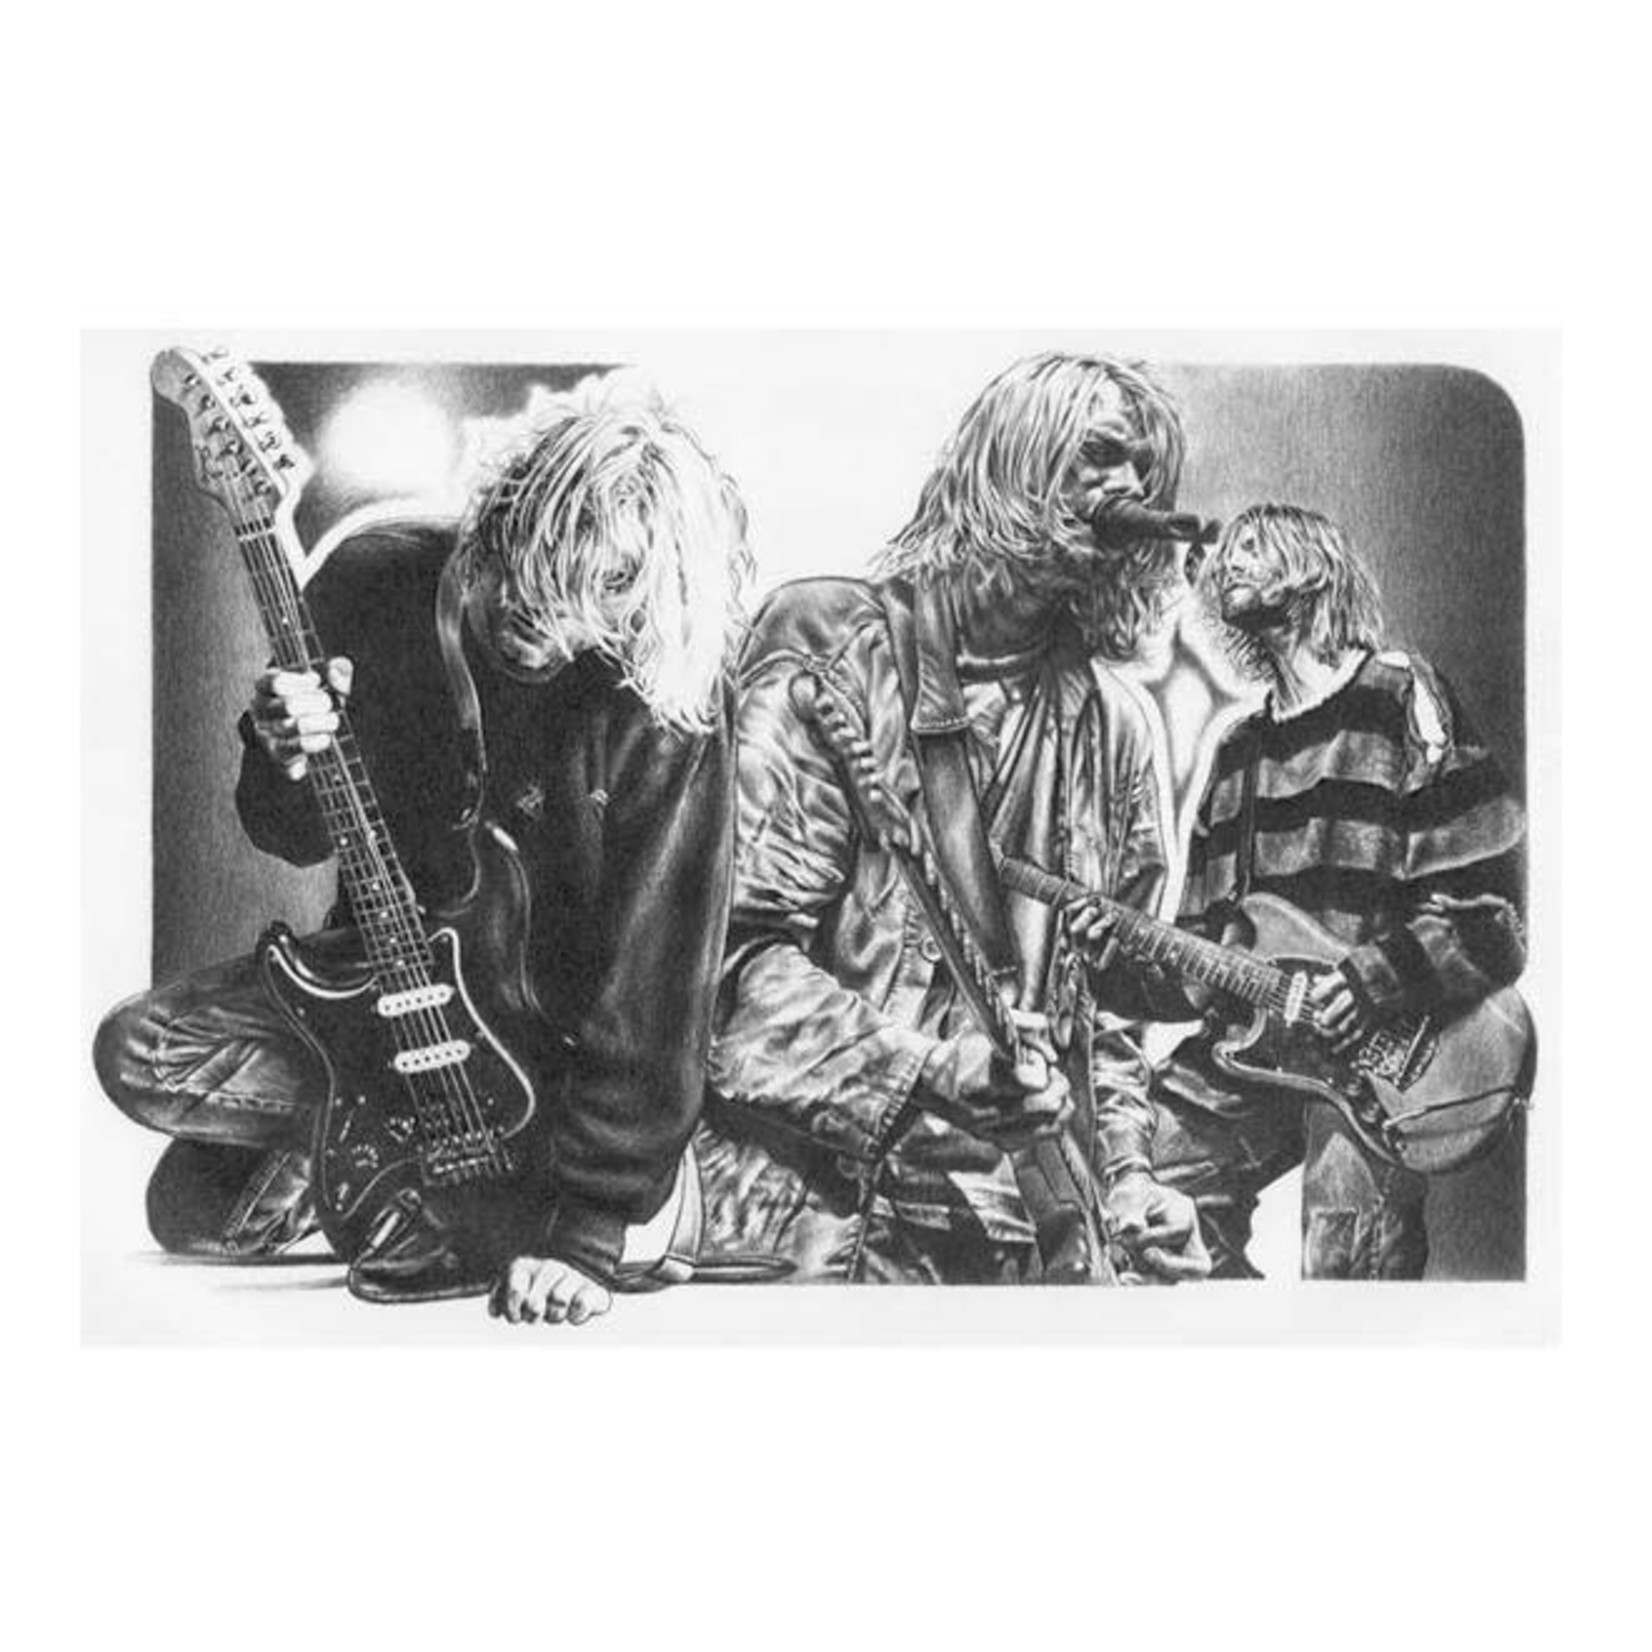 Rock Your Walls Off Kurt Cobain Collage (Poster) [18"x24"]